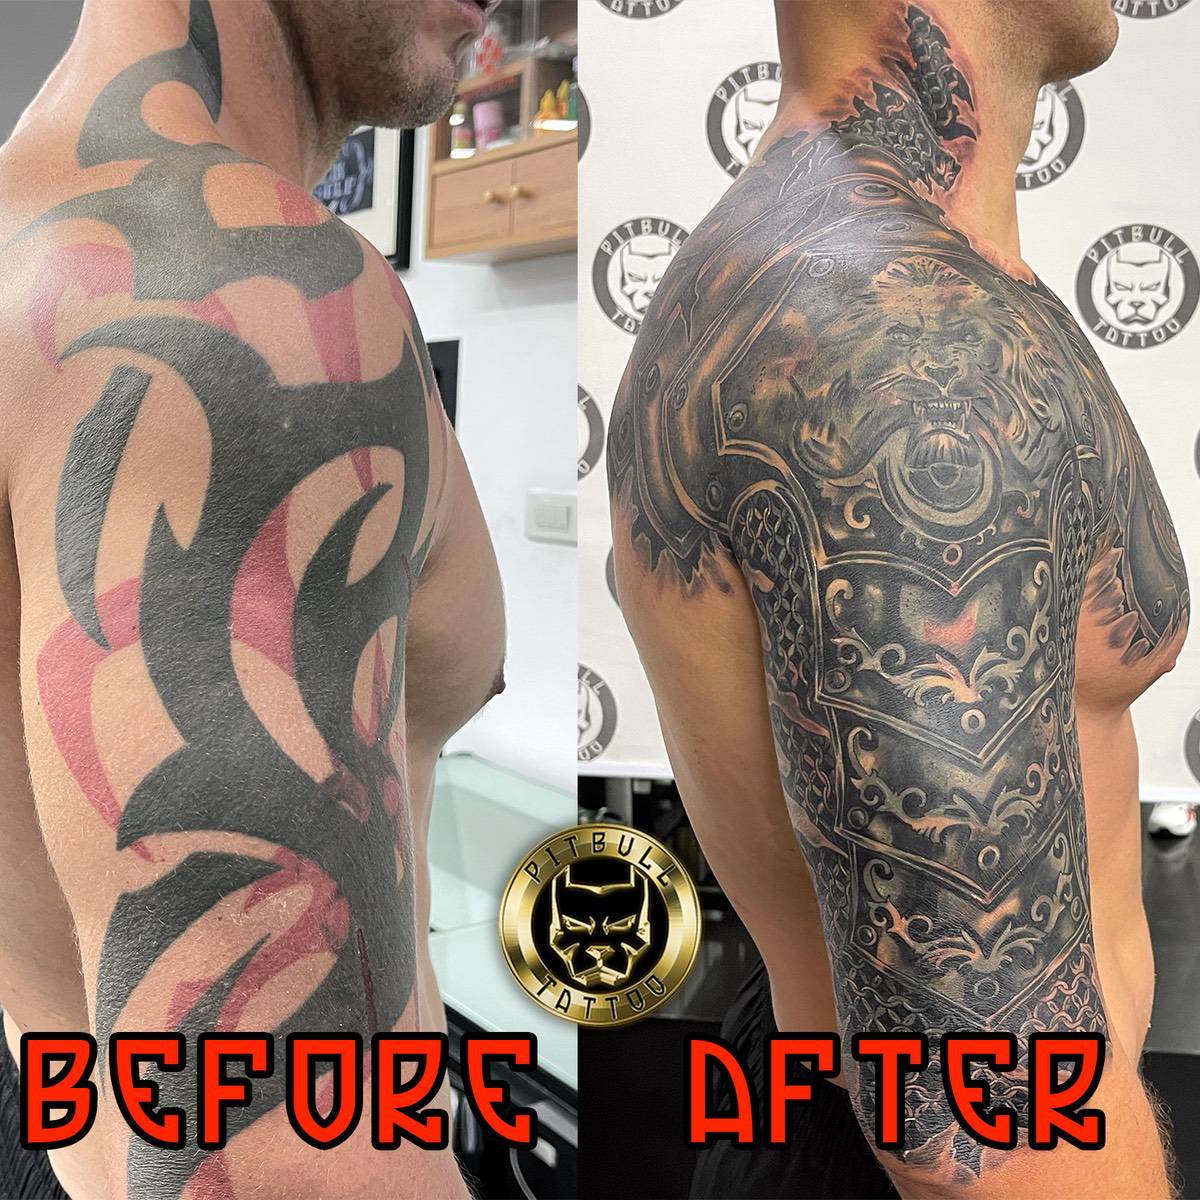 Al Kemp on Twitter Before and after tattoo rework  tattoo fix tattoo  Tattoofix tattoorework ink tattooartist roadrunnertattoostudio  alkemptattoo httpstcomc1aNXM9TO  Twitter